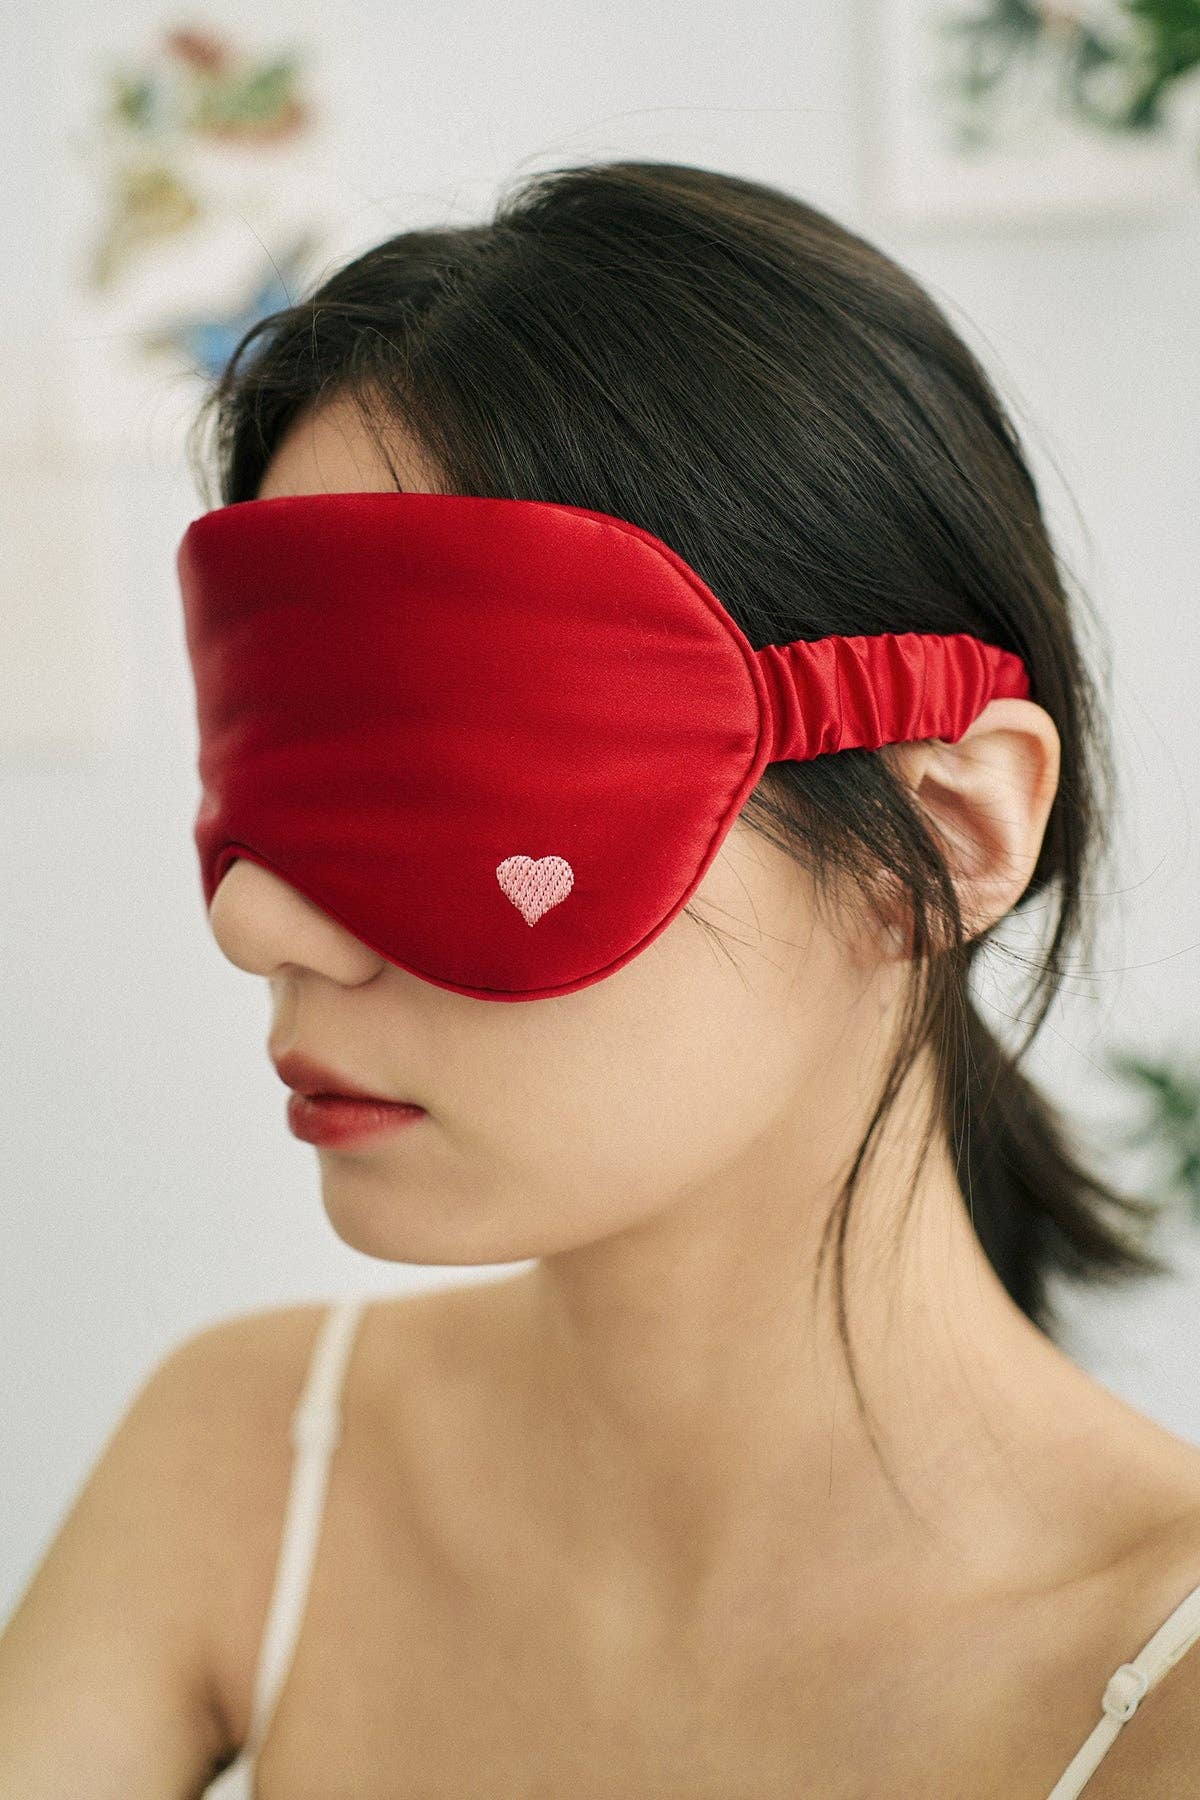 Lost Pattern NYC - “Love Heart” Silk Sleep Eye Mask - Red - Red